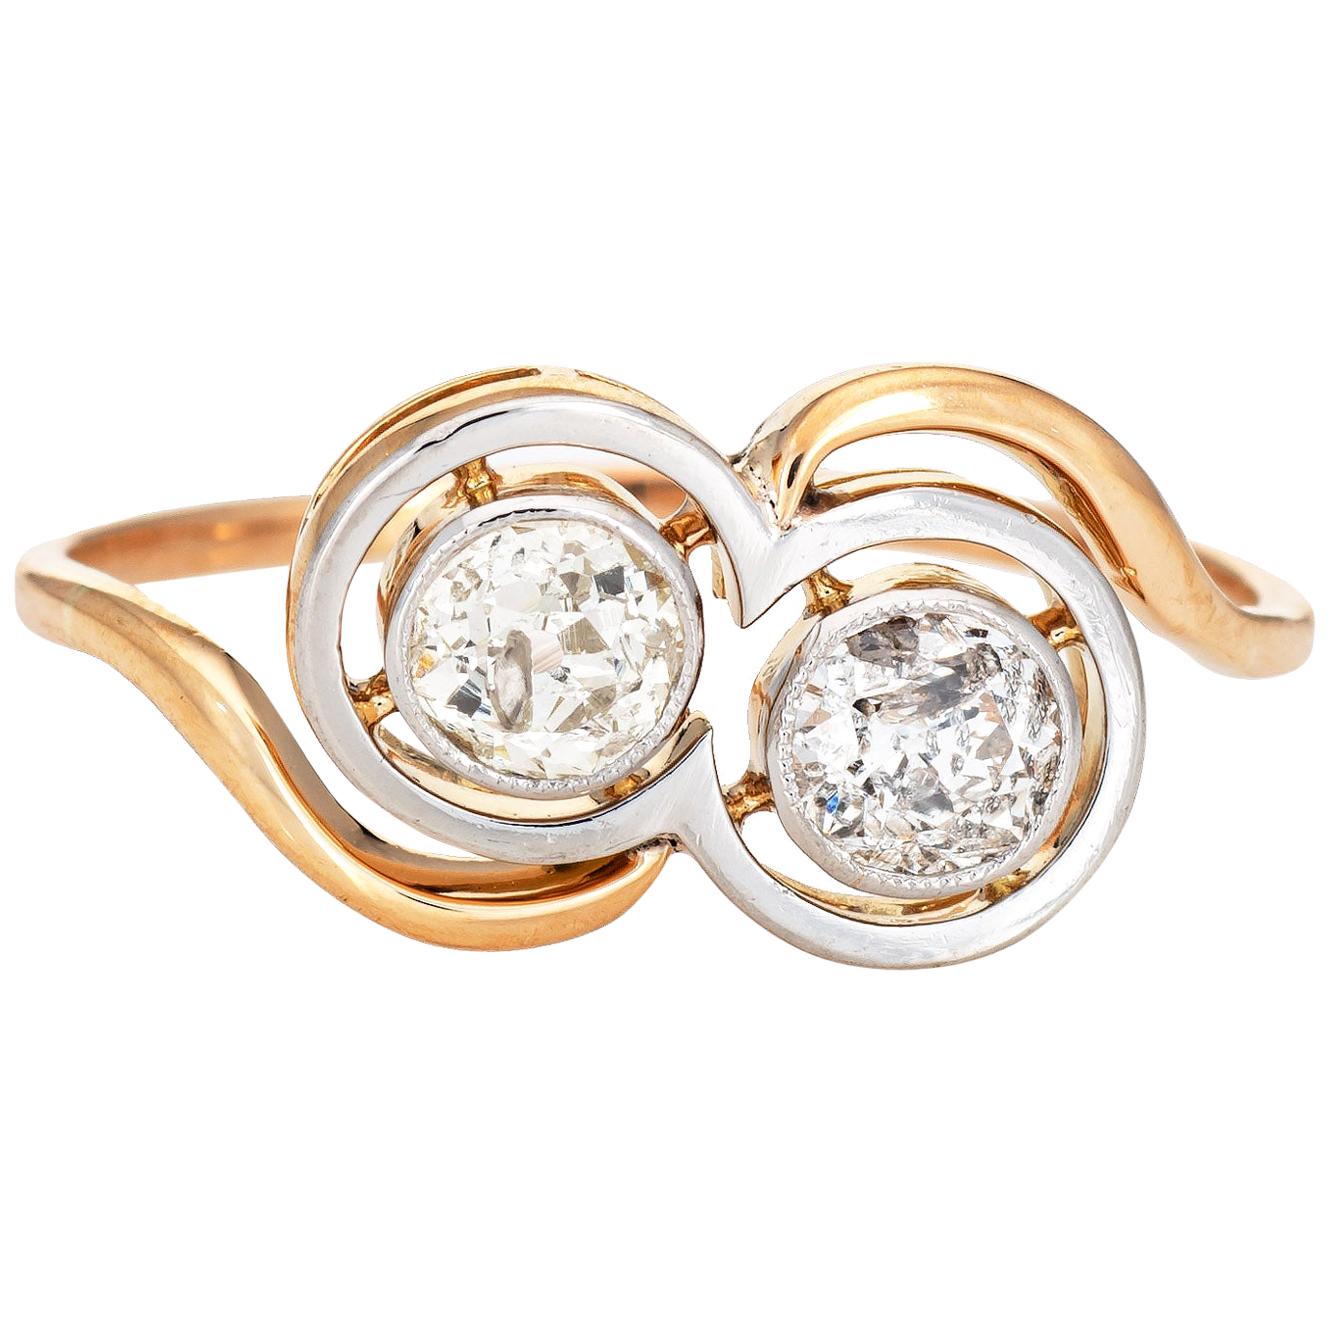 Vintage Art Deco Double Diamond Ring Toi et Moi Old Mine Cuts 14 Karat Gold